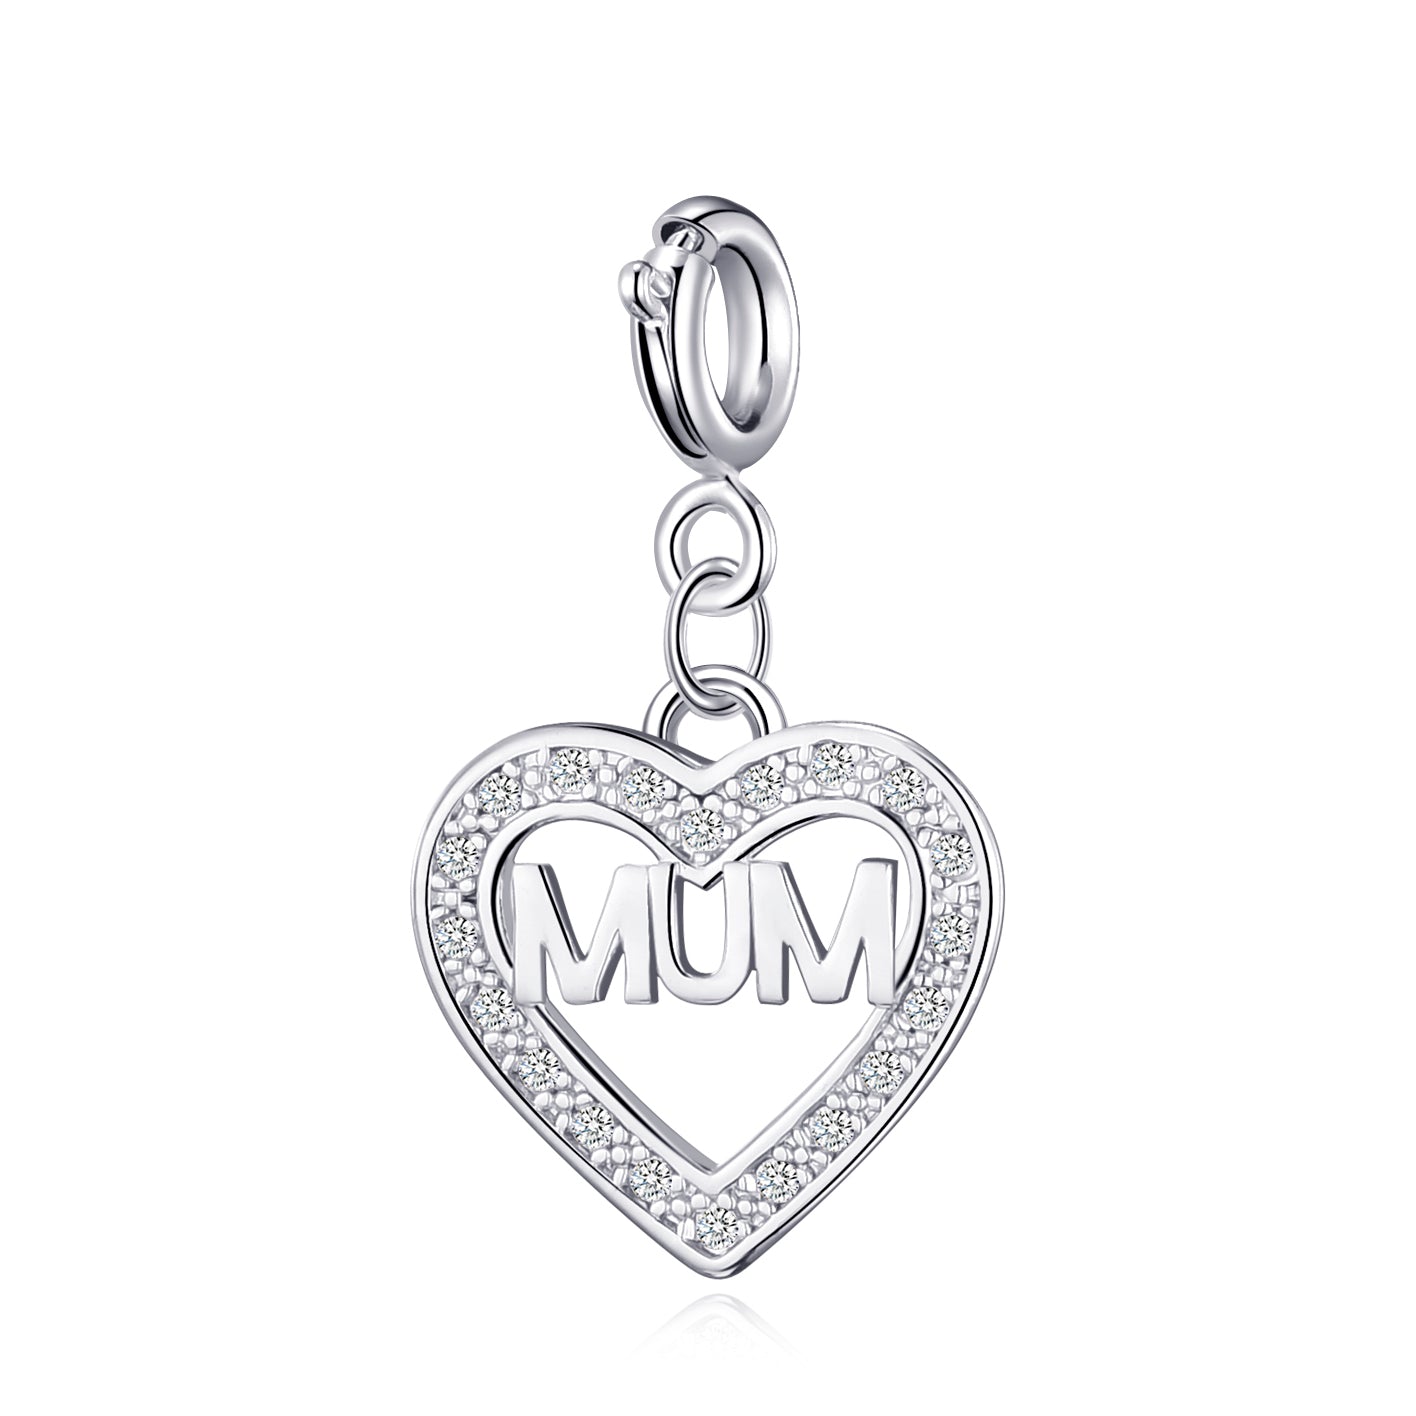 Mum Heart Charm Created with Zircondia® Crystals by Philip Jones Jewellery